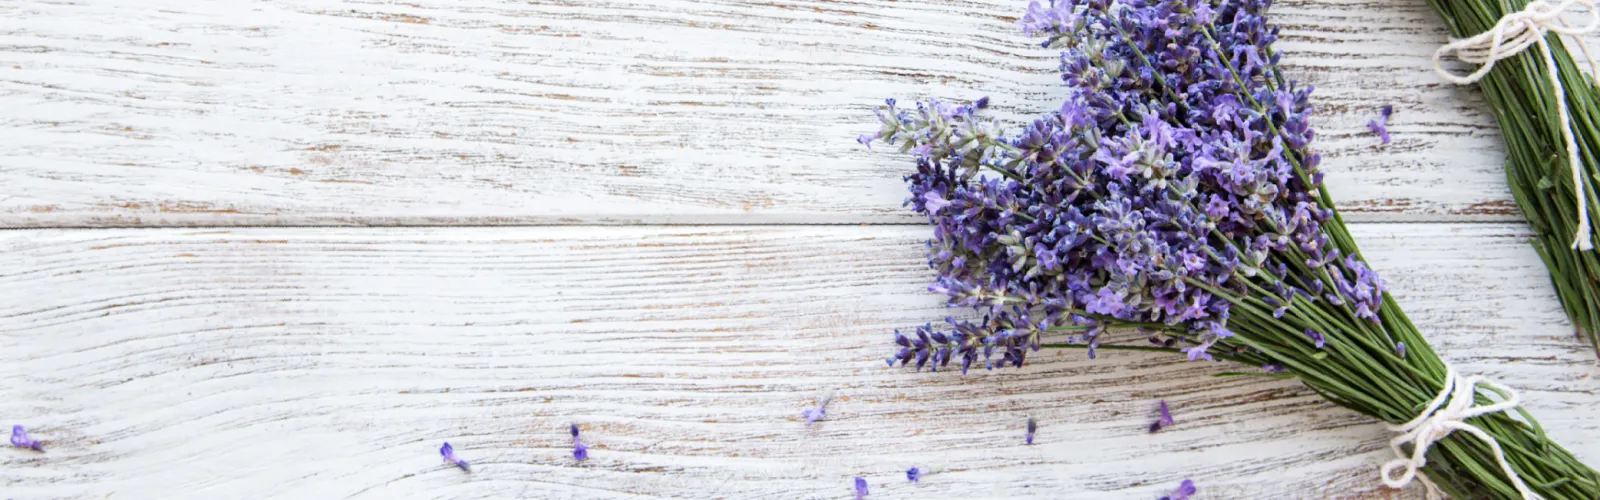 Fresh lavender flowers on wood background